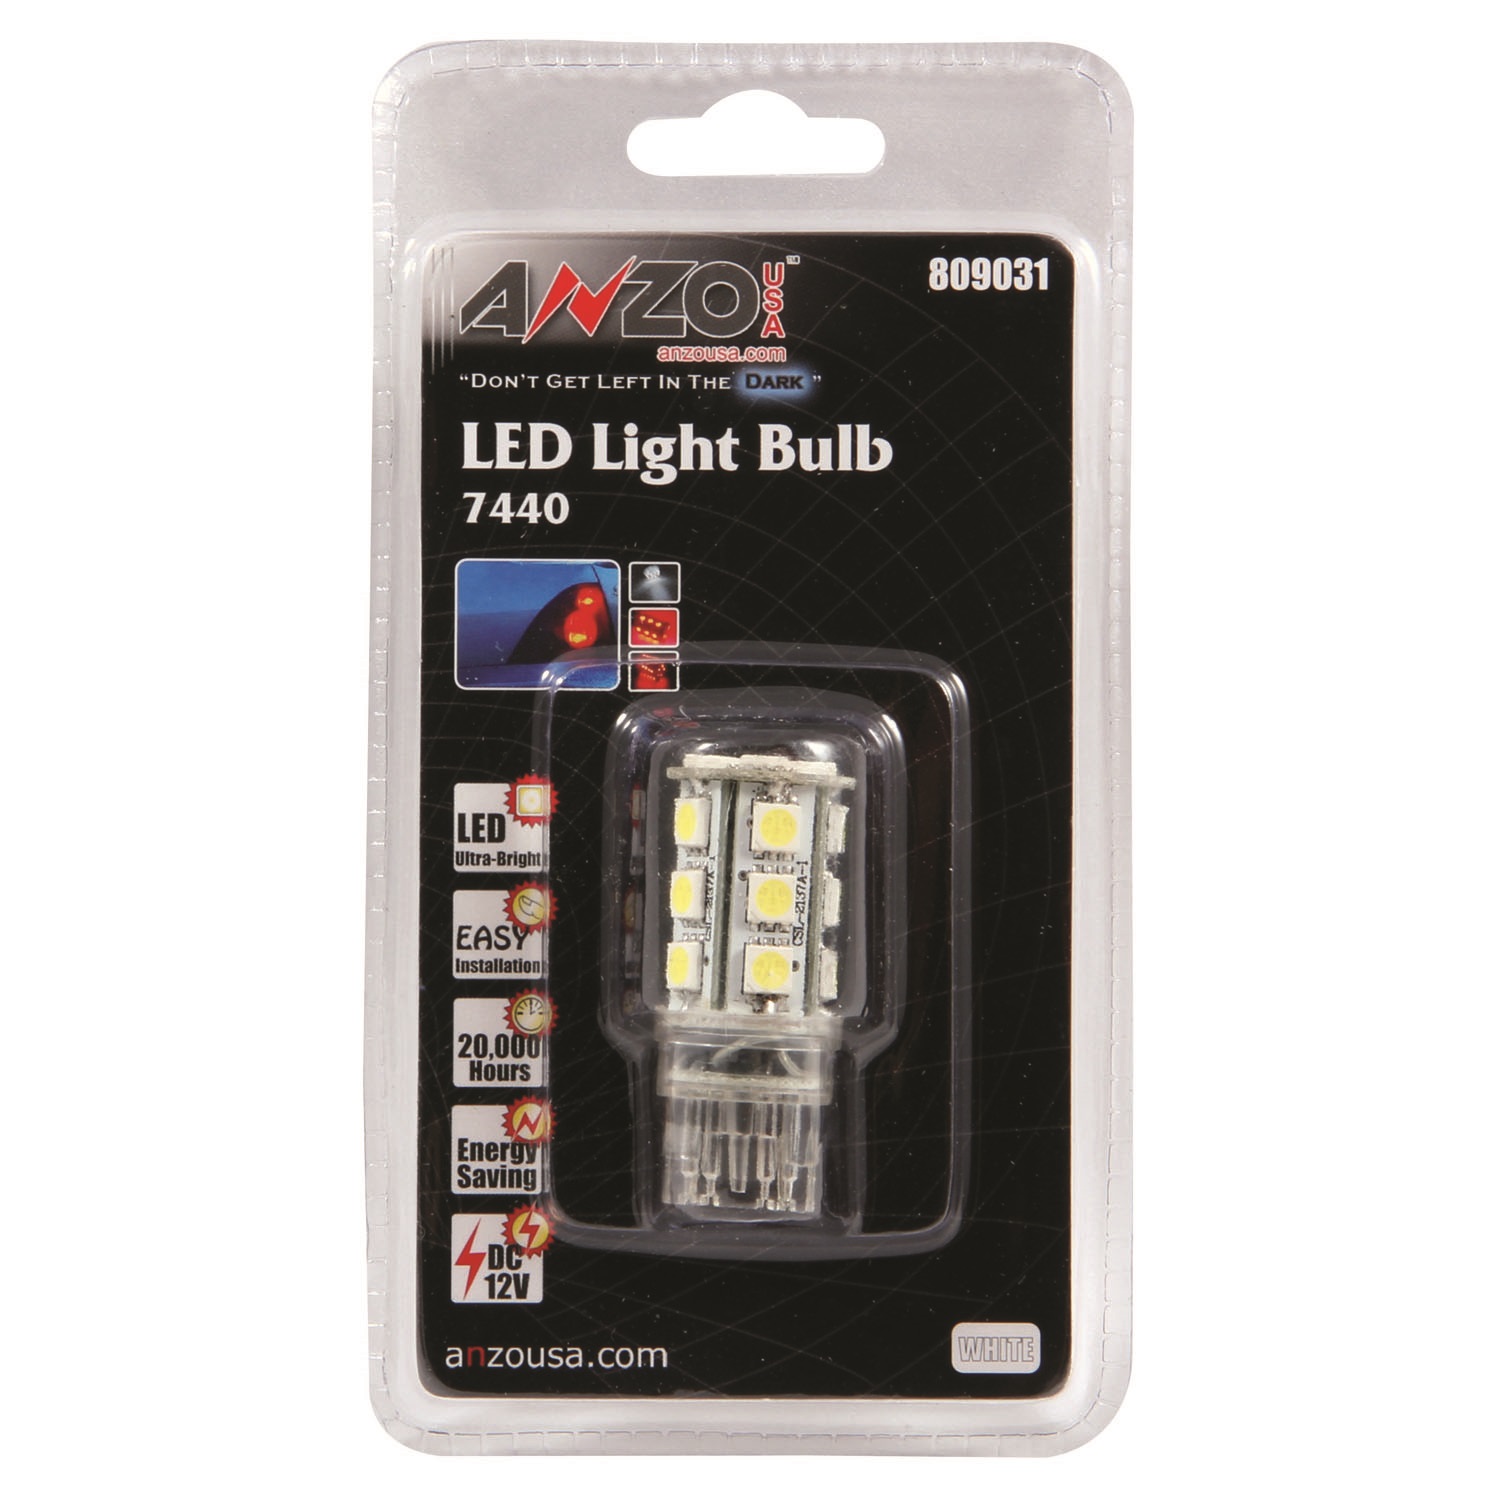 Anzo USA Anzo USA 809031 LED Replacement Bulb